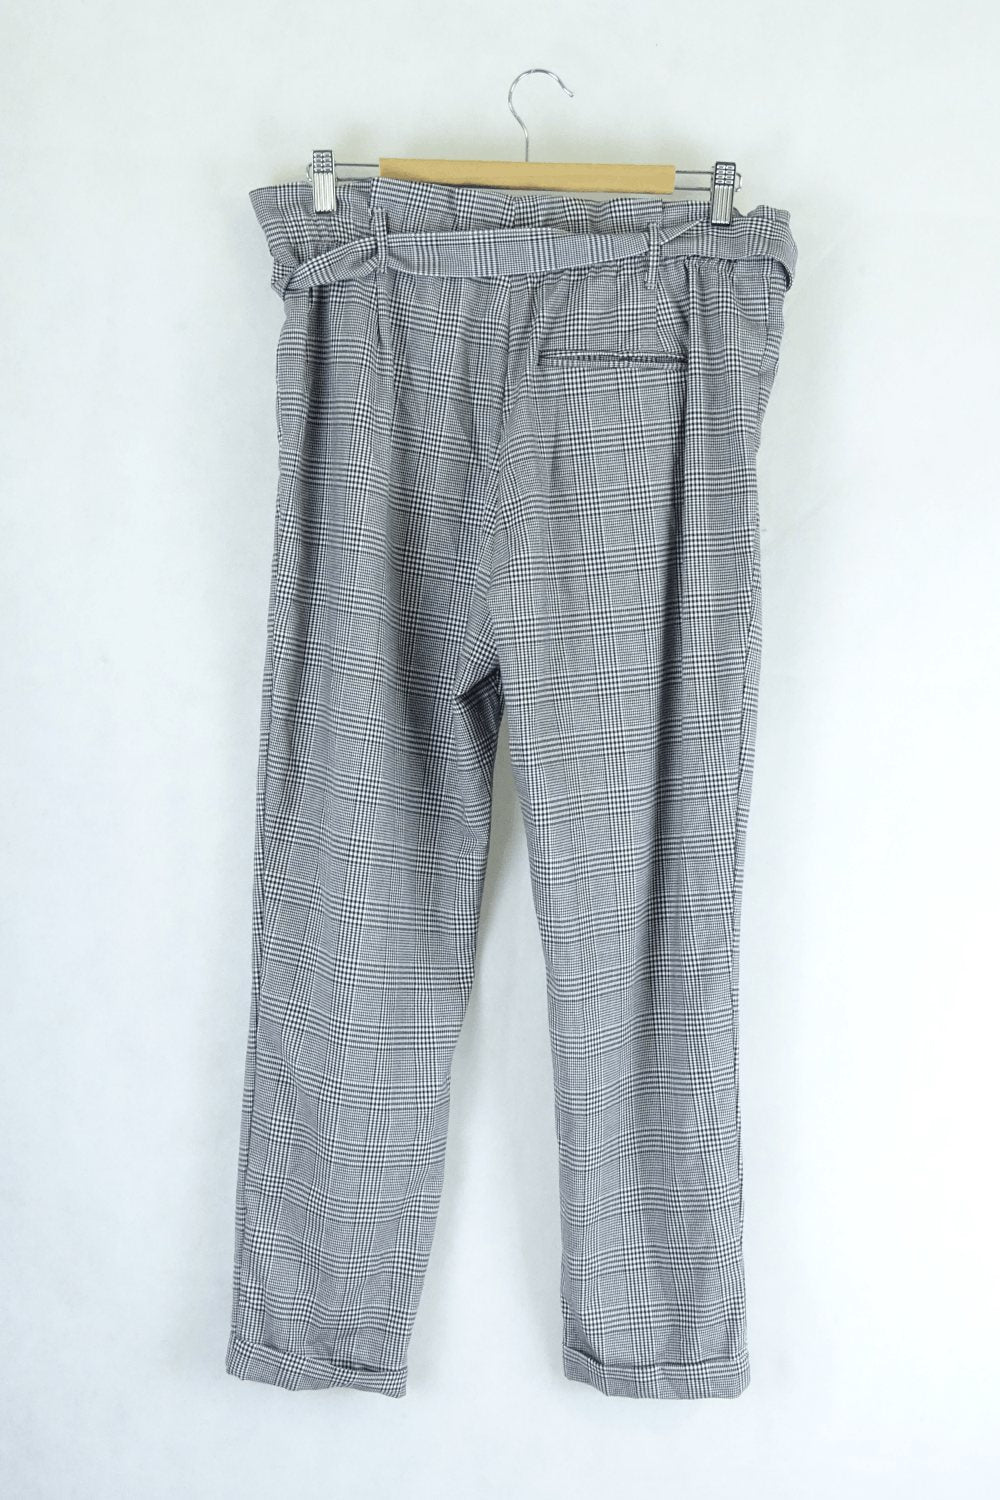 Zara Checkered Pants - S and M Sizes